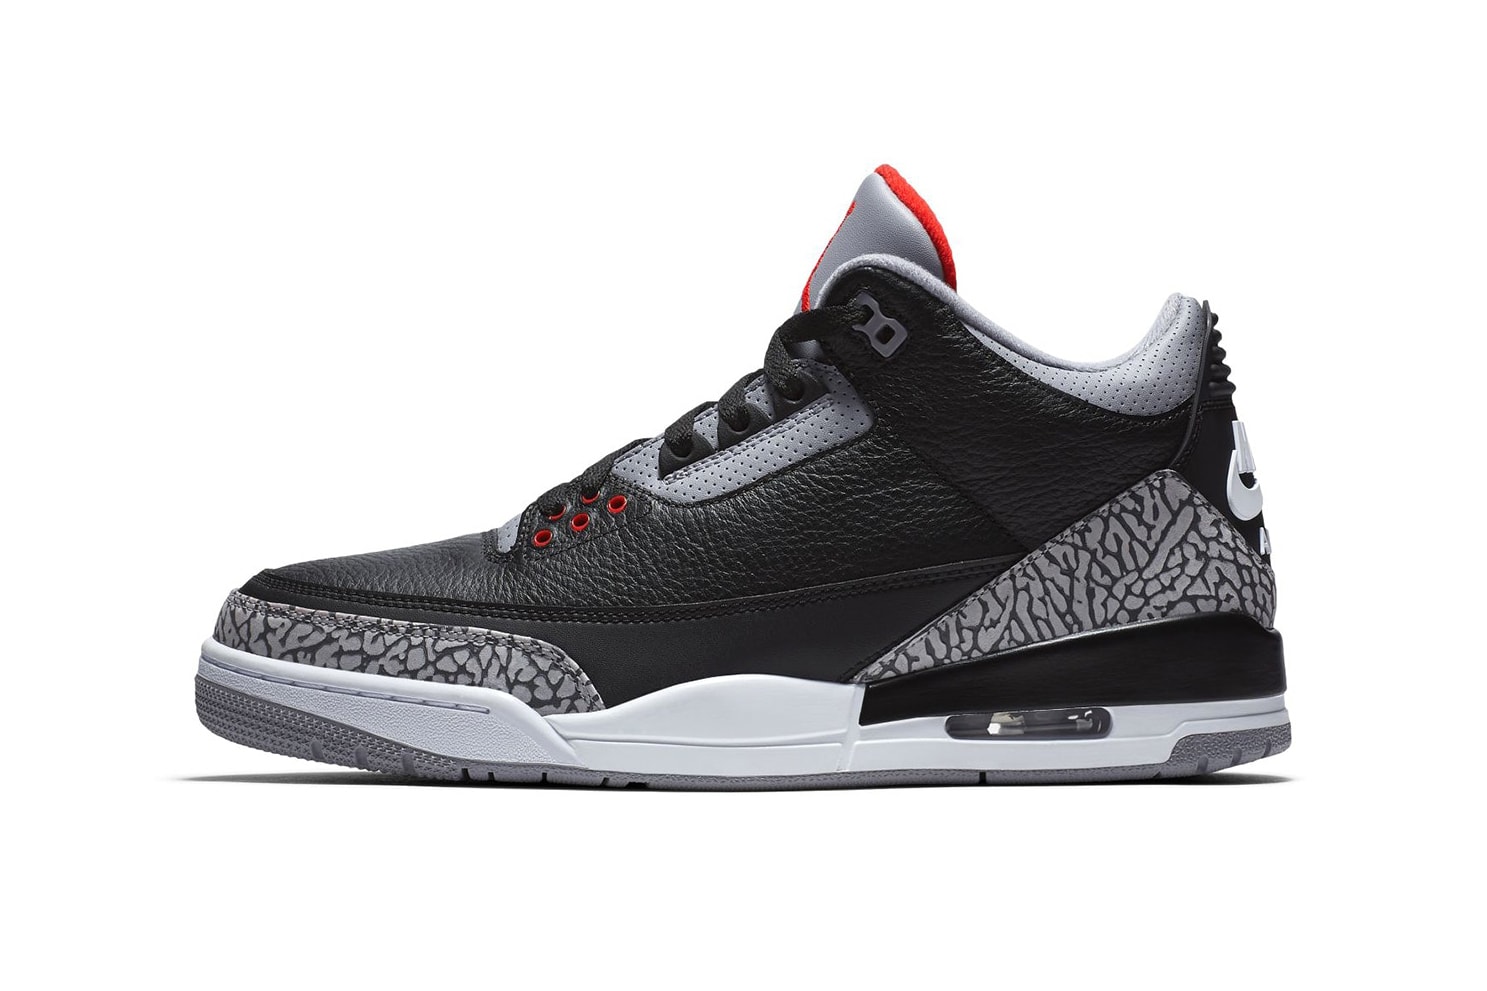 Air Jordan 3 Black Cement Restock grey red release info sneakers footwear michael jordan